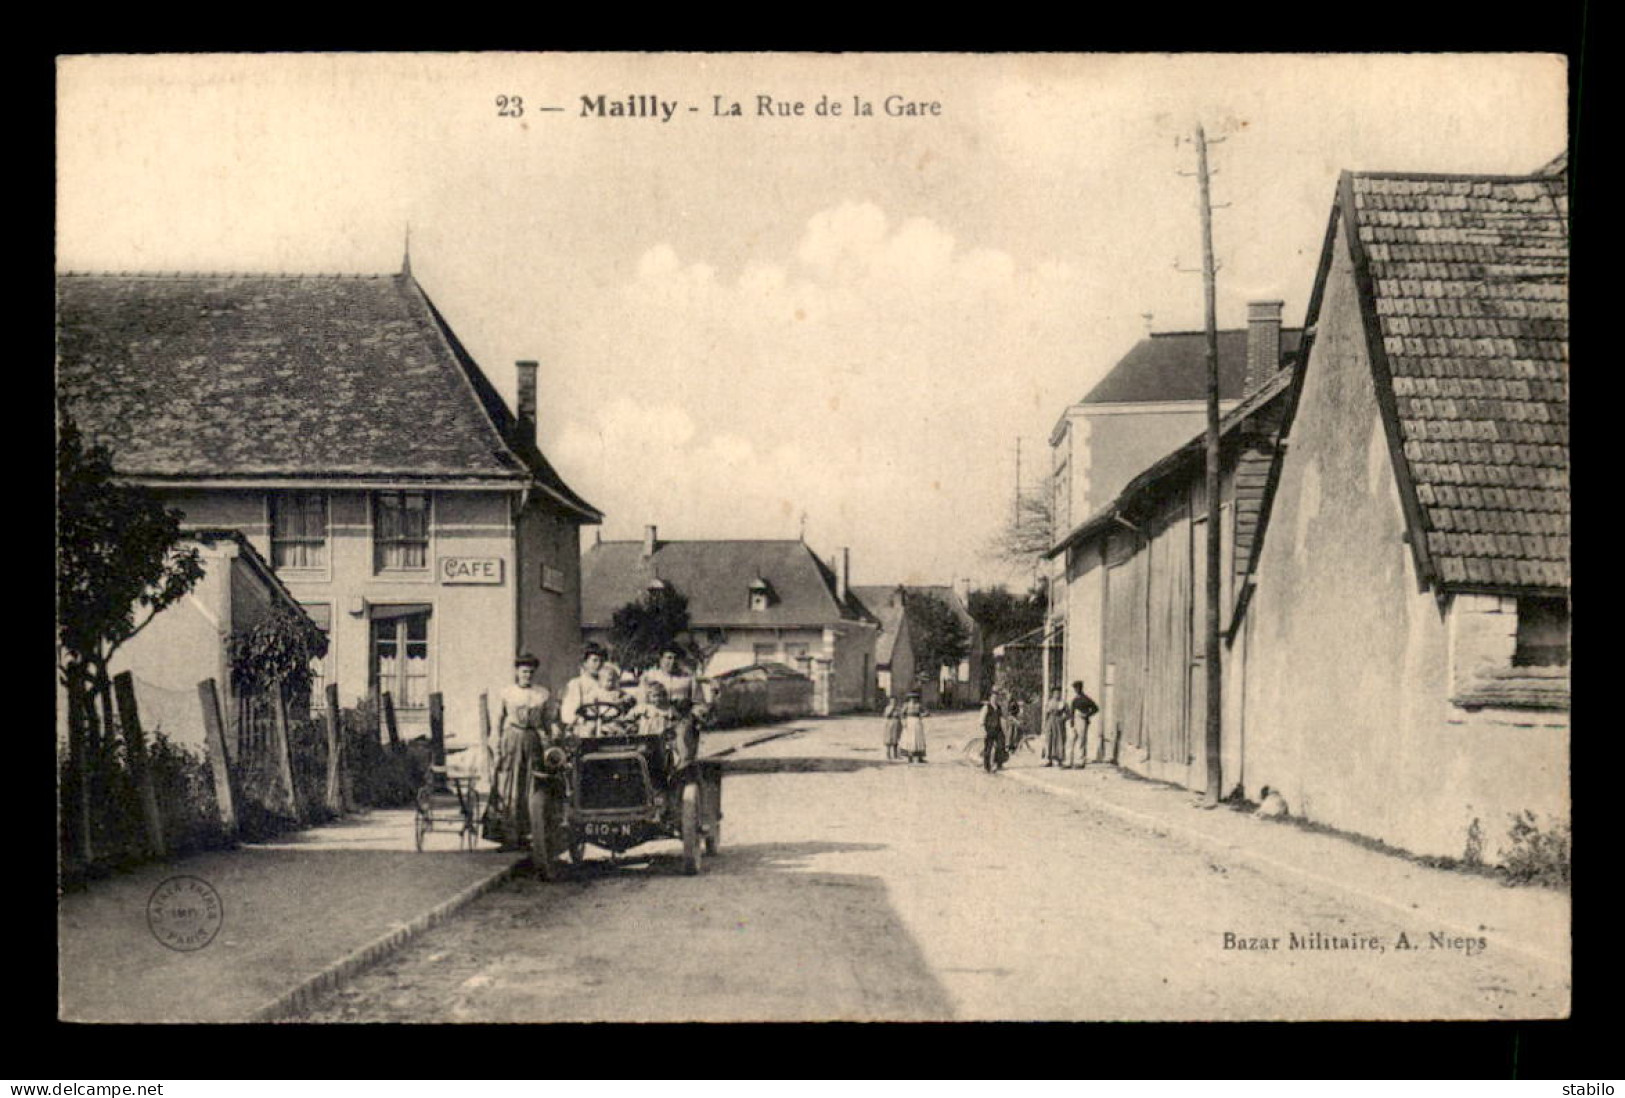 10 - MAILLY - RUE DE LA GARE - AUTOMOBILE ANCIENNE IMMATRICULEE 610 - N - VOIR ETAT - Mailly-le-Camp